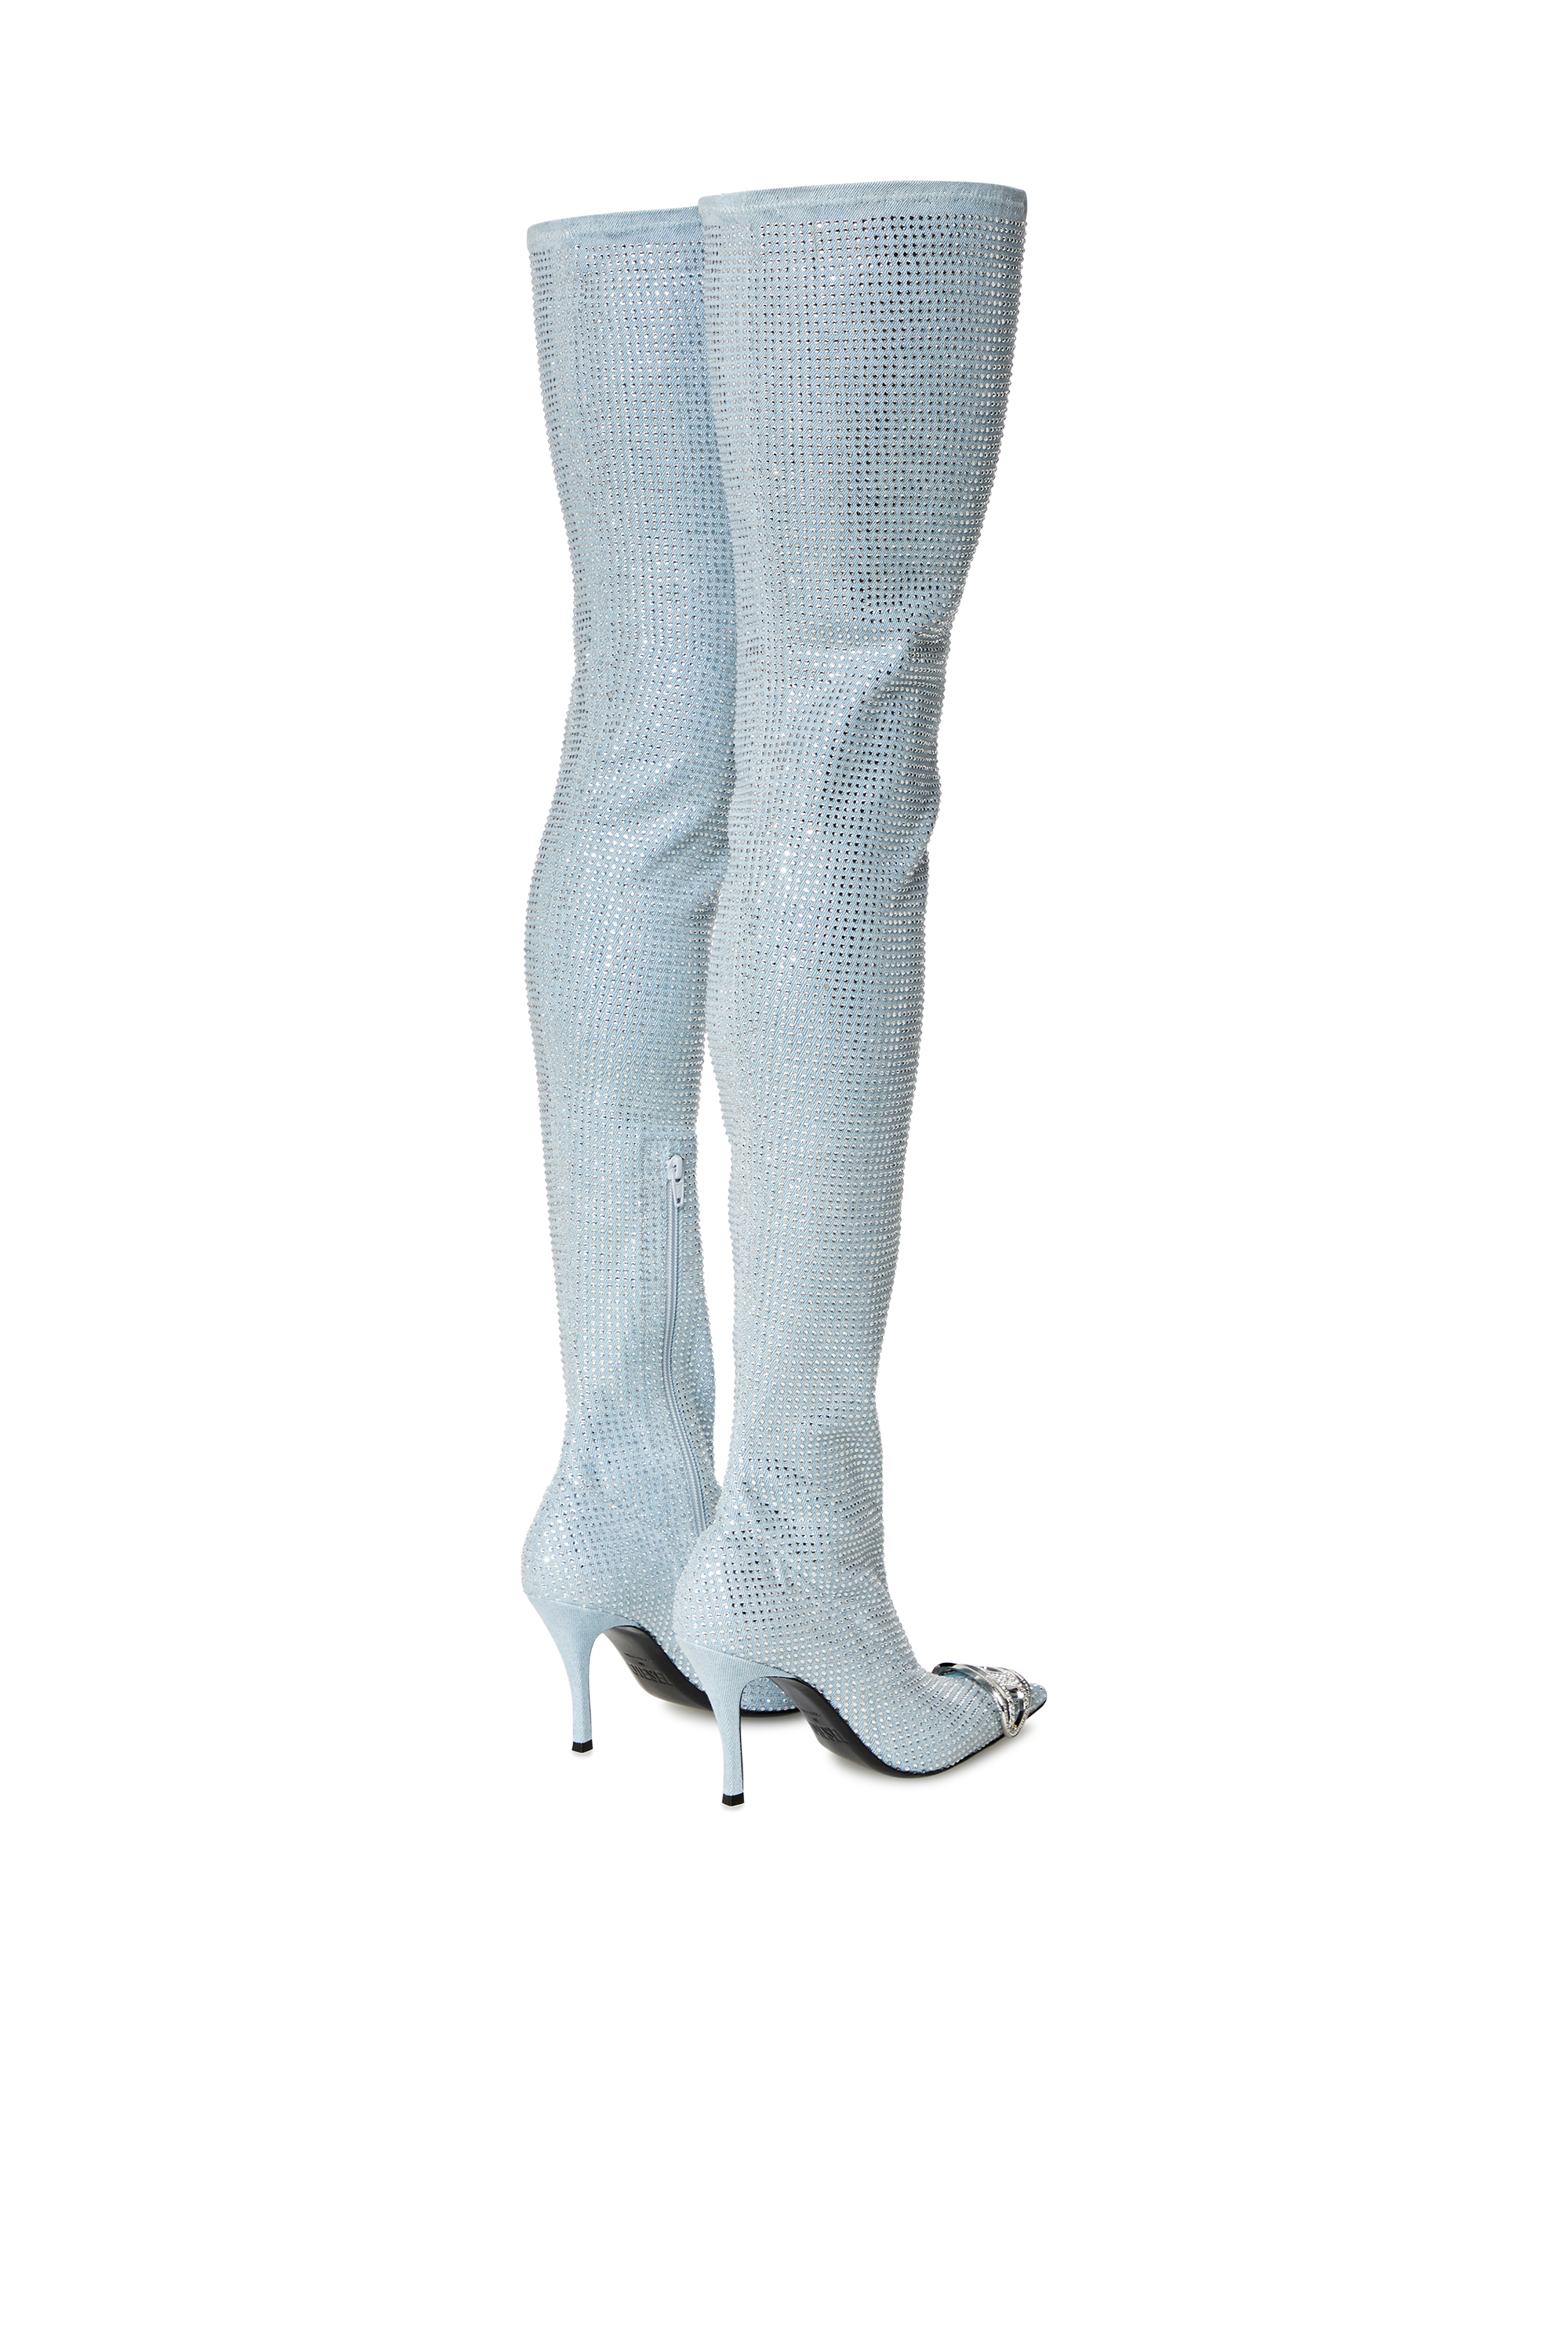 Diesel - D-VENUS TBT, Woman D-Venus Tbt Boots - Over-the-knee boots in rhinestone denim in Blue - Image 3